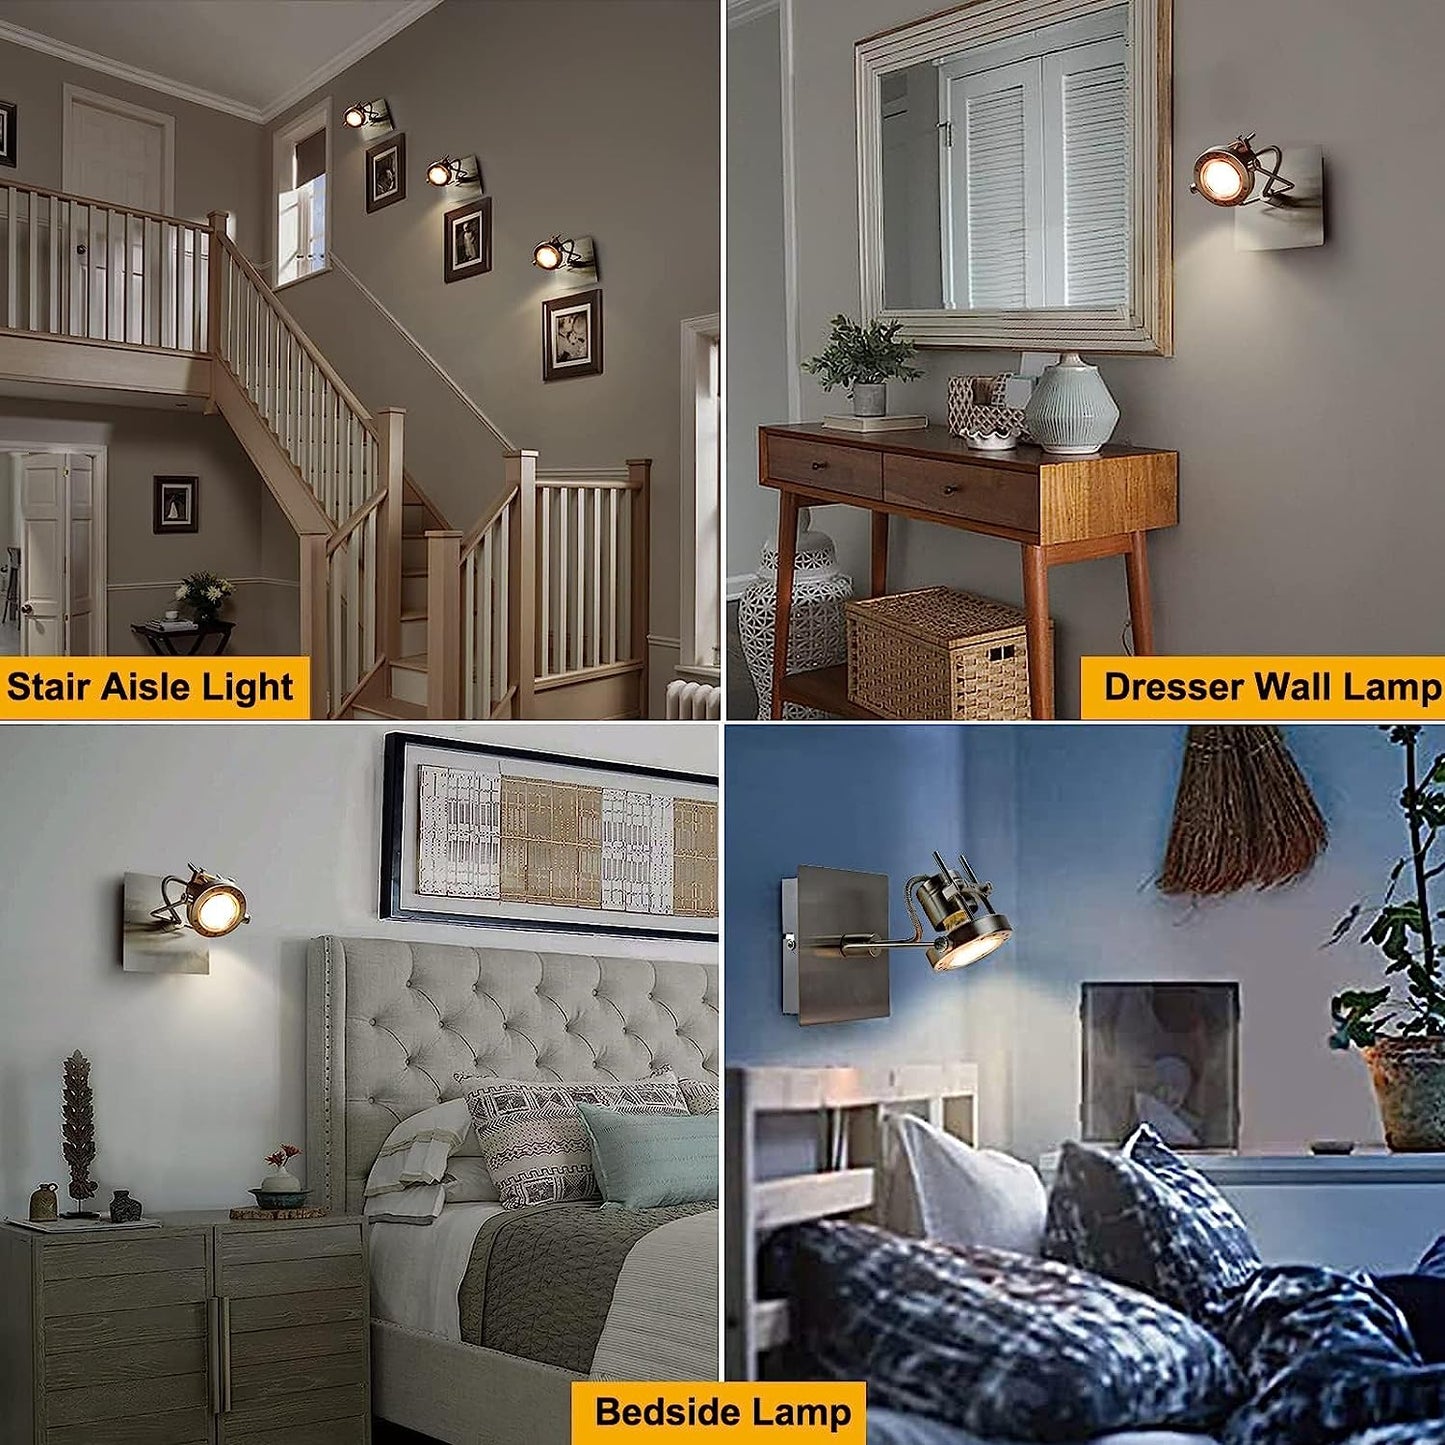 DLLT Led Ceiling Spotlight, Adjustable Wall Mount Lamp, Plug-In Track Light Kit Lighting for Bedside, Headboard Picture, Bedroom, Kitchen, Living Room,Warm White